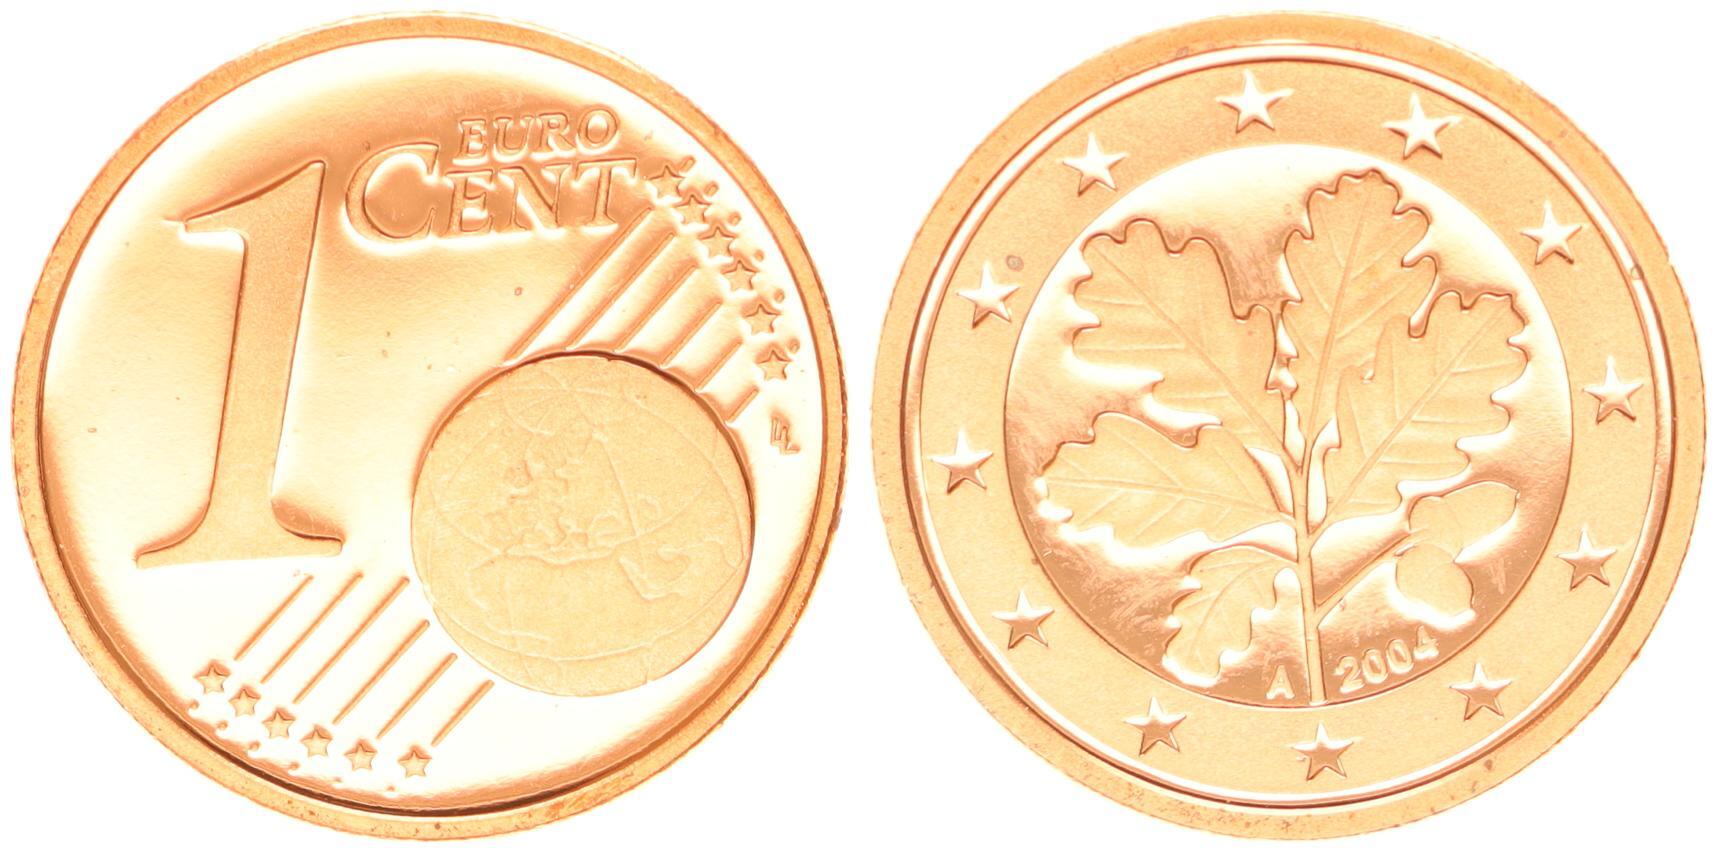 Deutschland 1 Cent 2004 A PP Proof